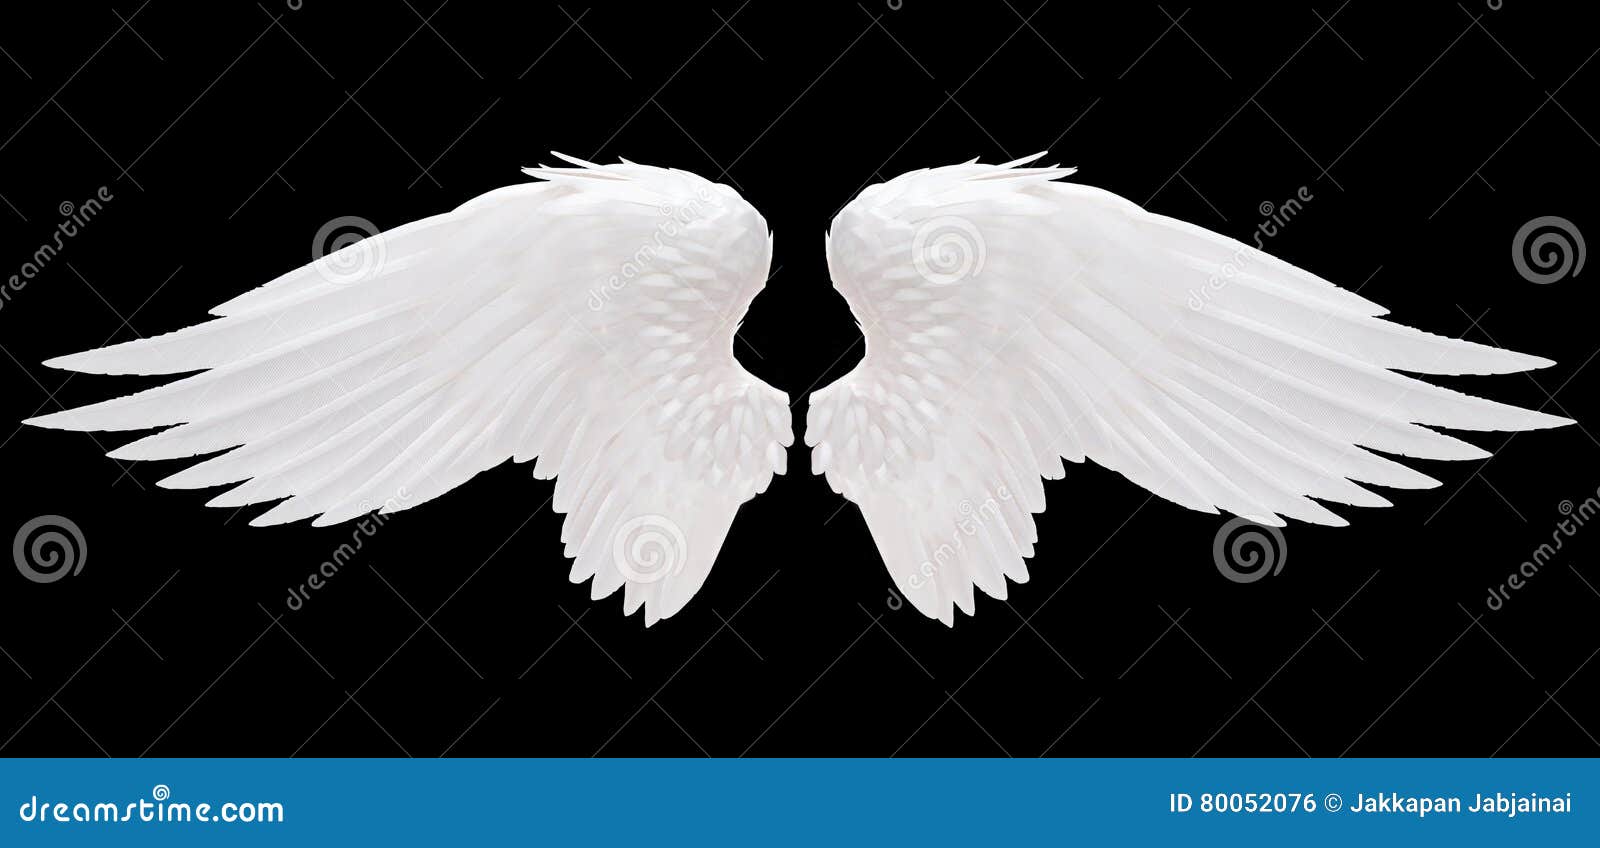 white angel wing